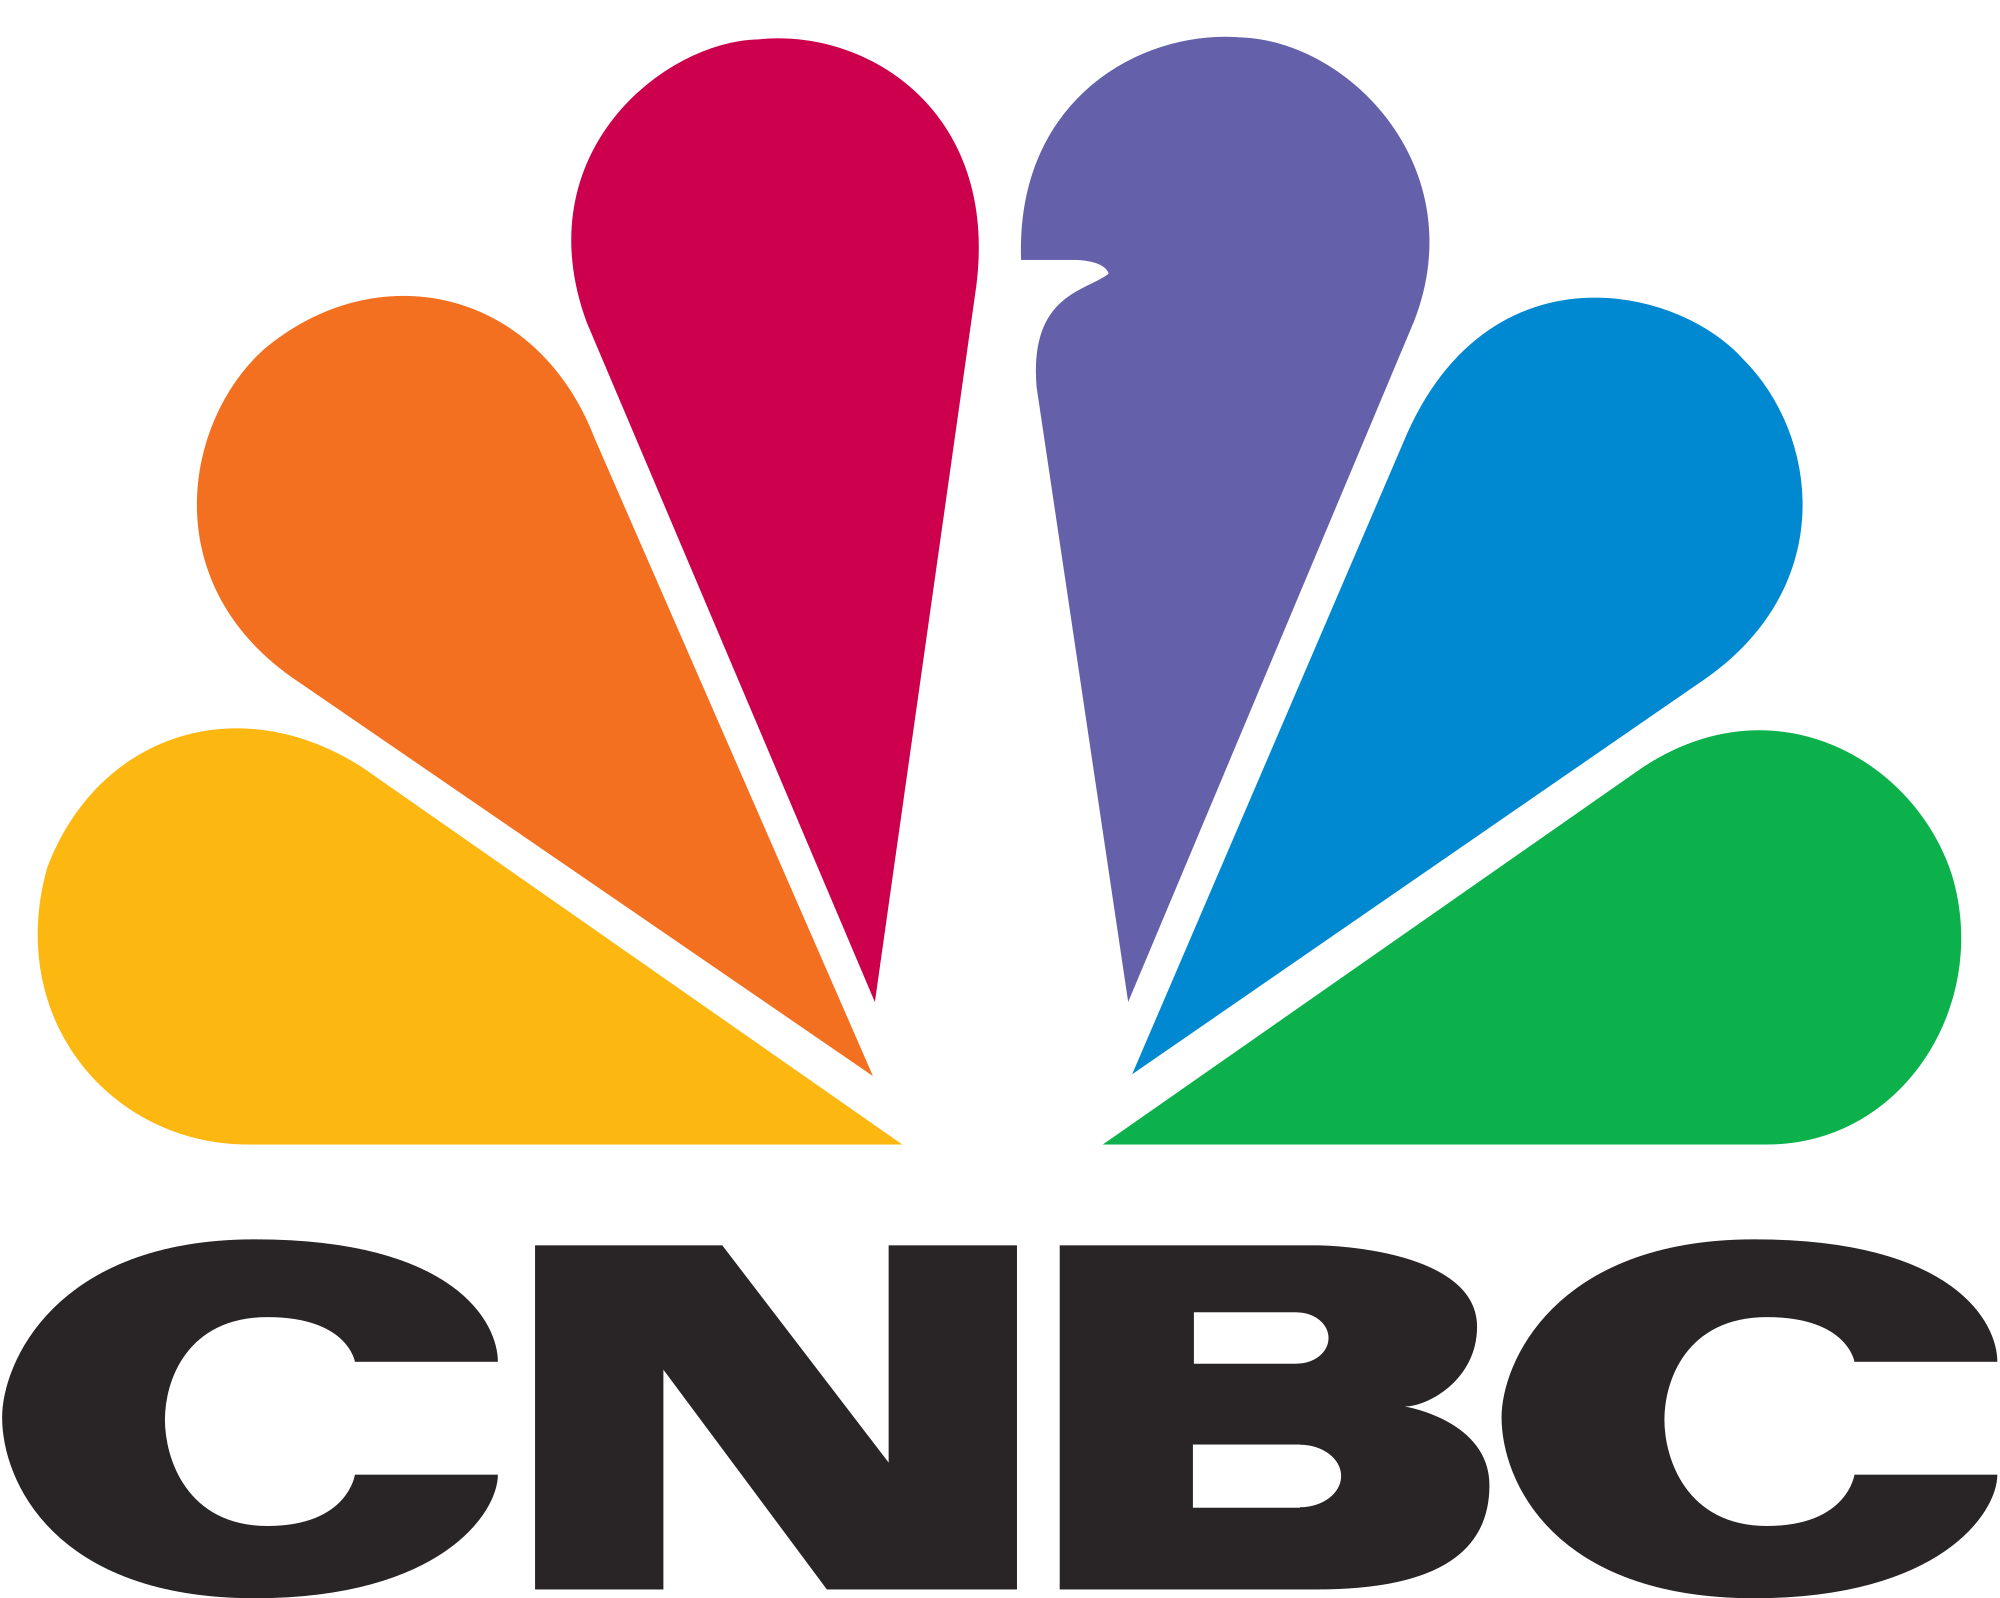 CNBC Logo - File:CNBC logo.svg - Wikimedia Commons